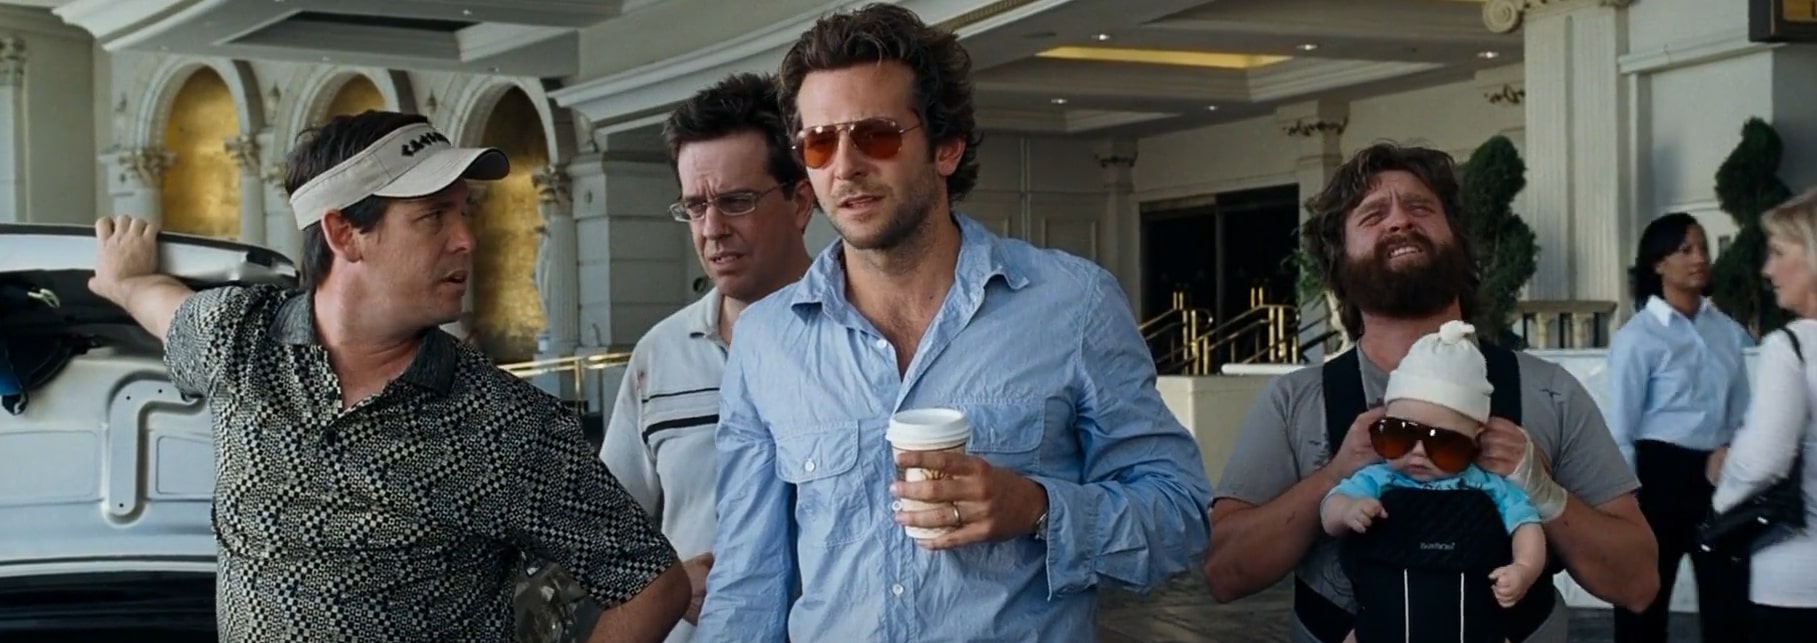 Bradley Cooper’s The Hangover Sunglasses – Like a Film Star